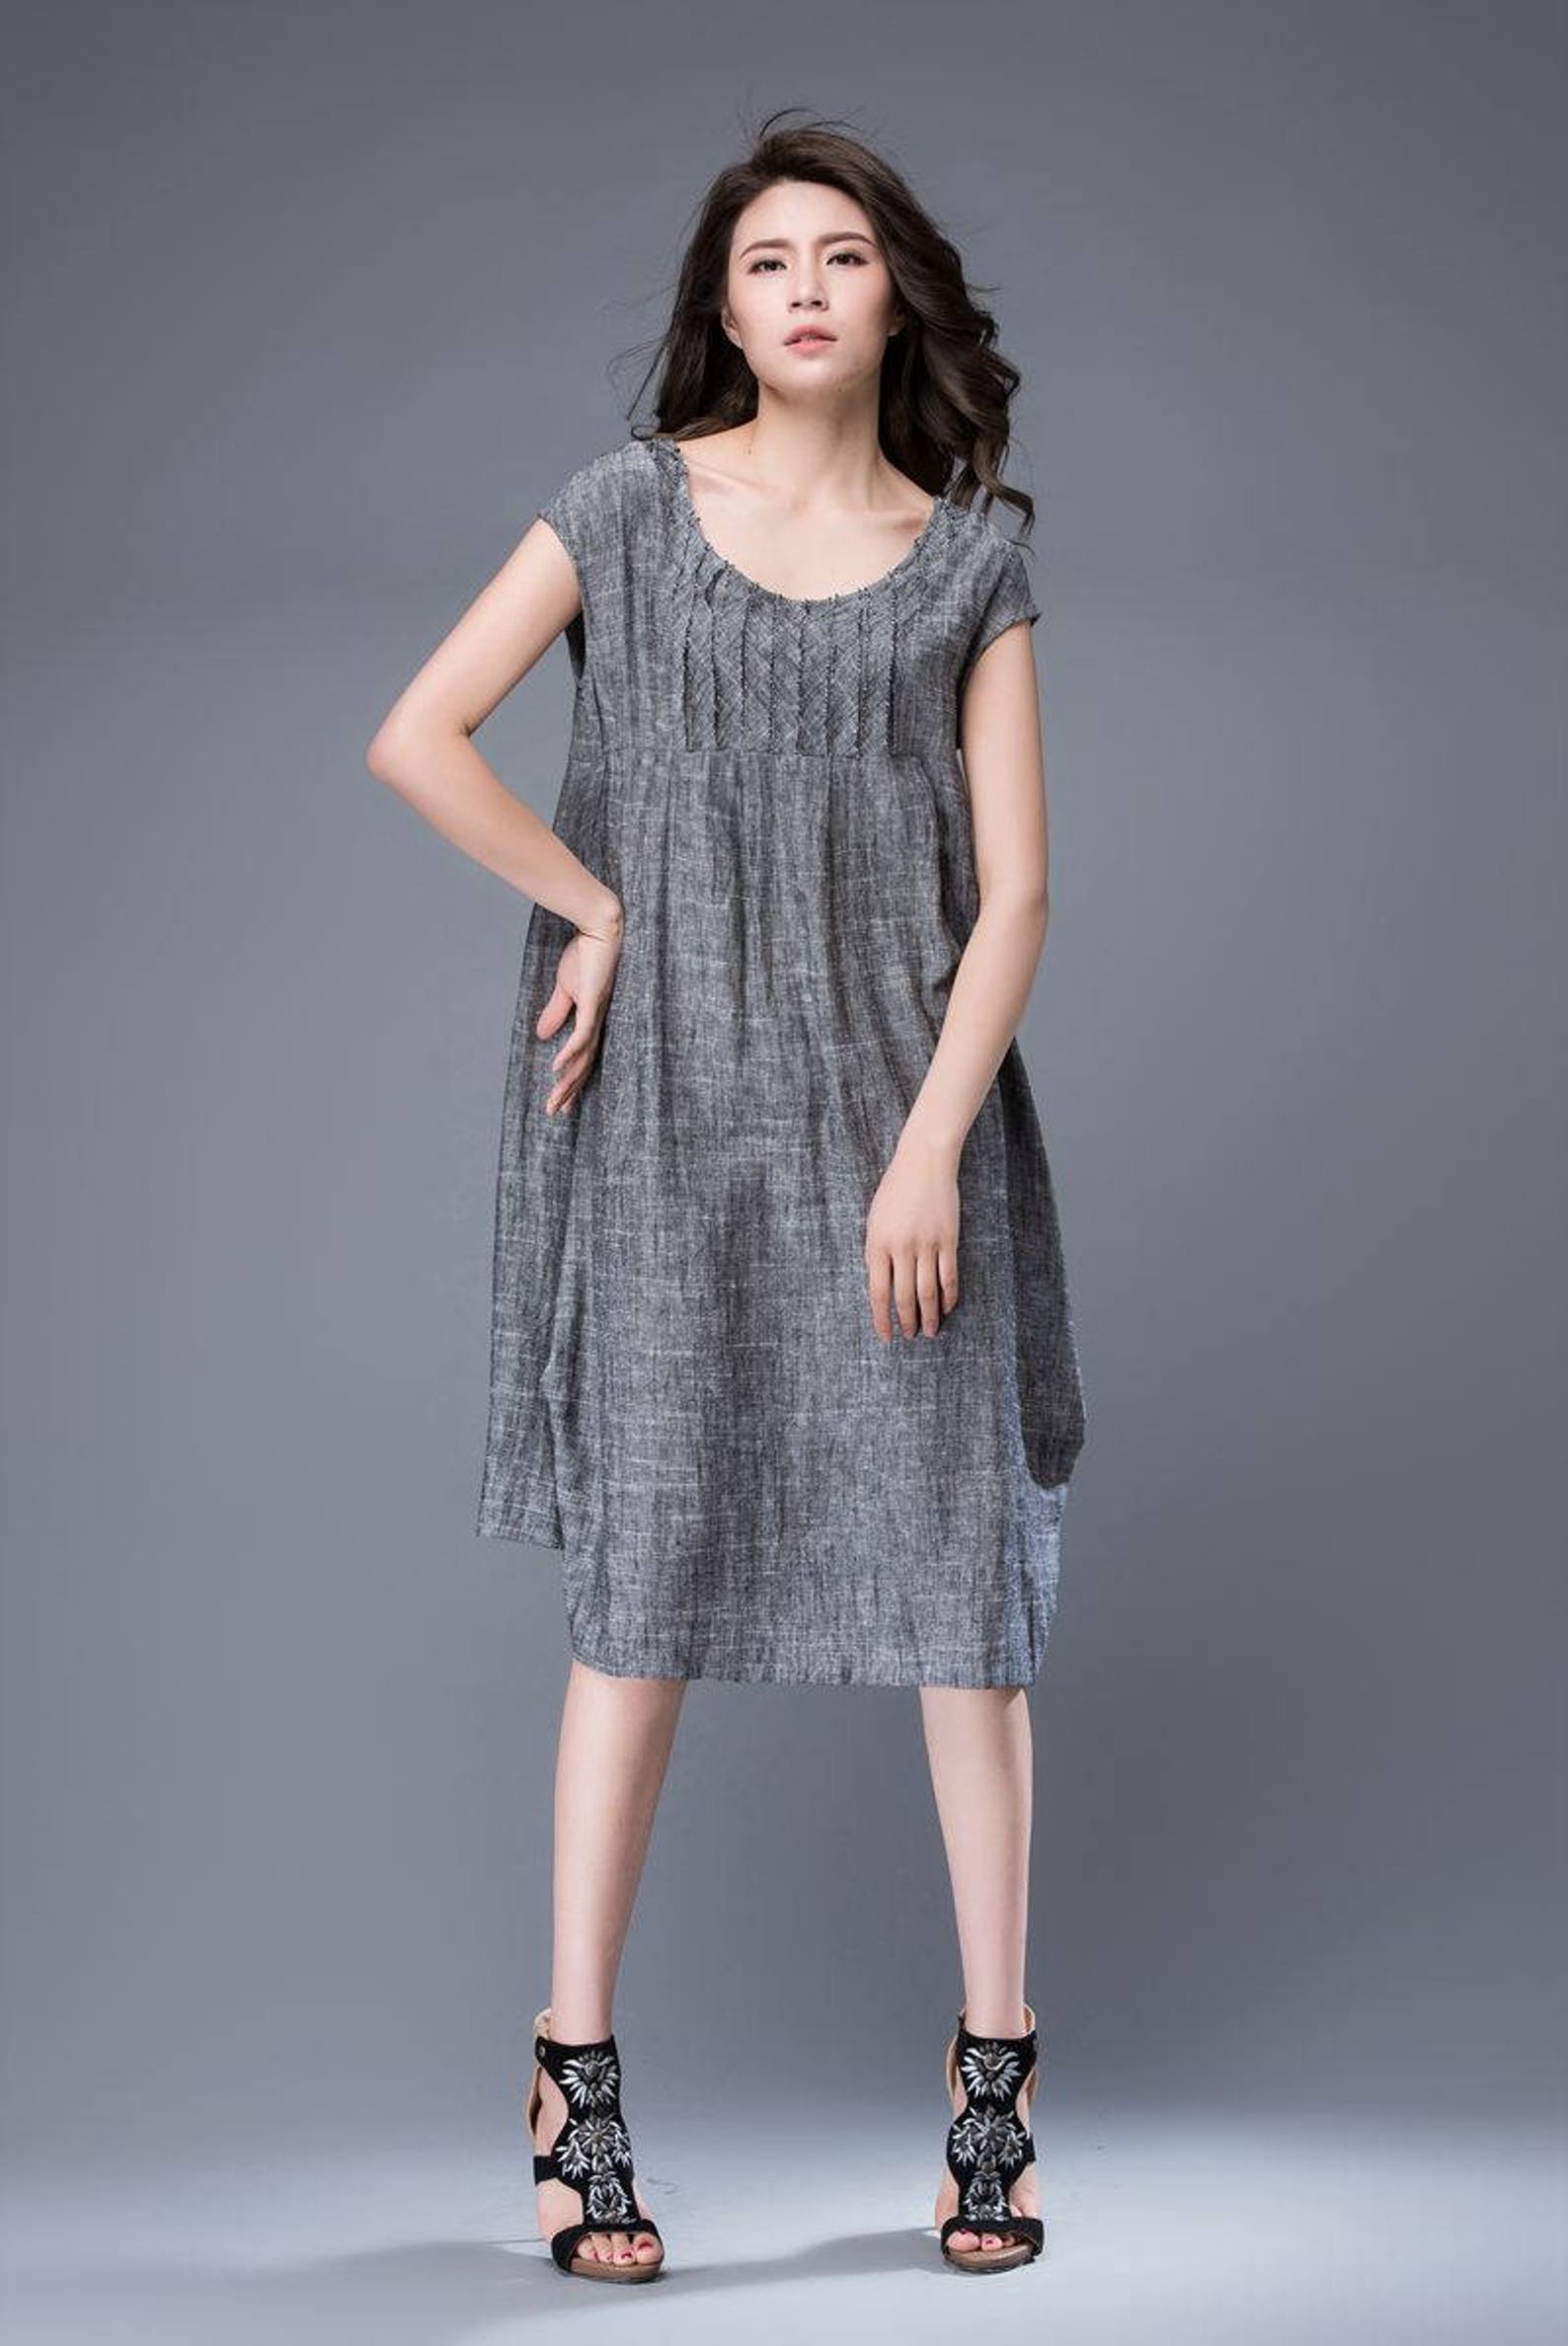 Gray Tunic dressLinen dress maternity dress Midi Linen | Etsy